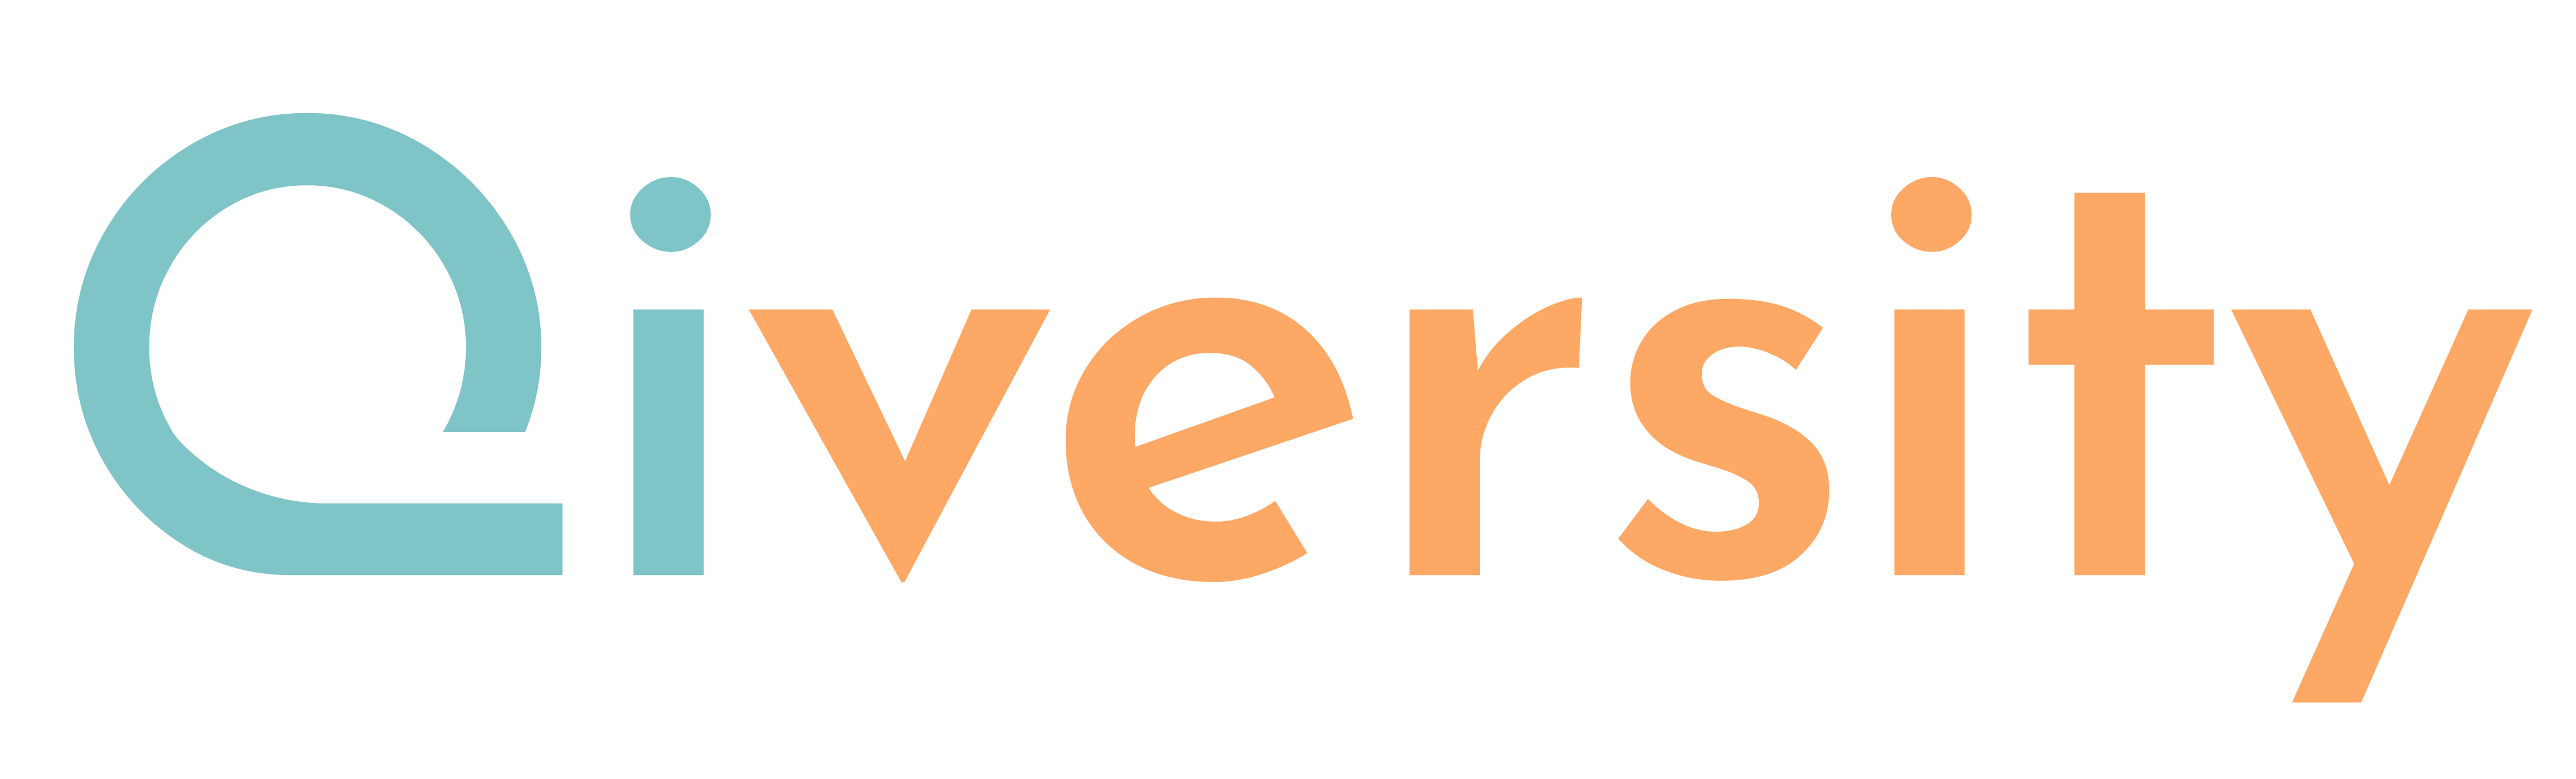 Qiversity Logo